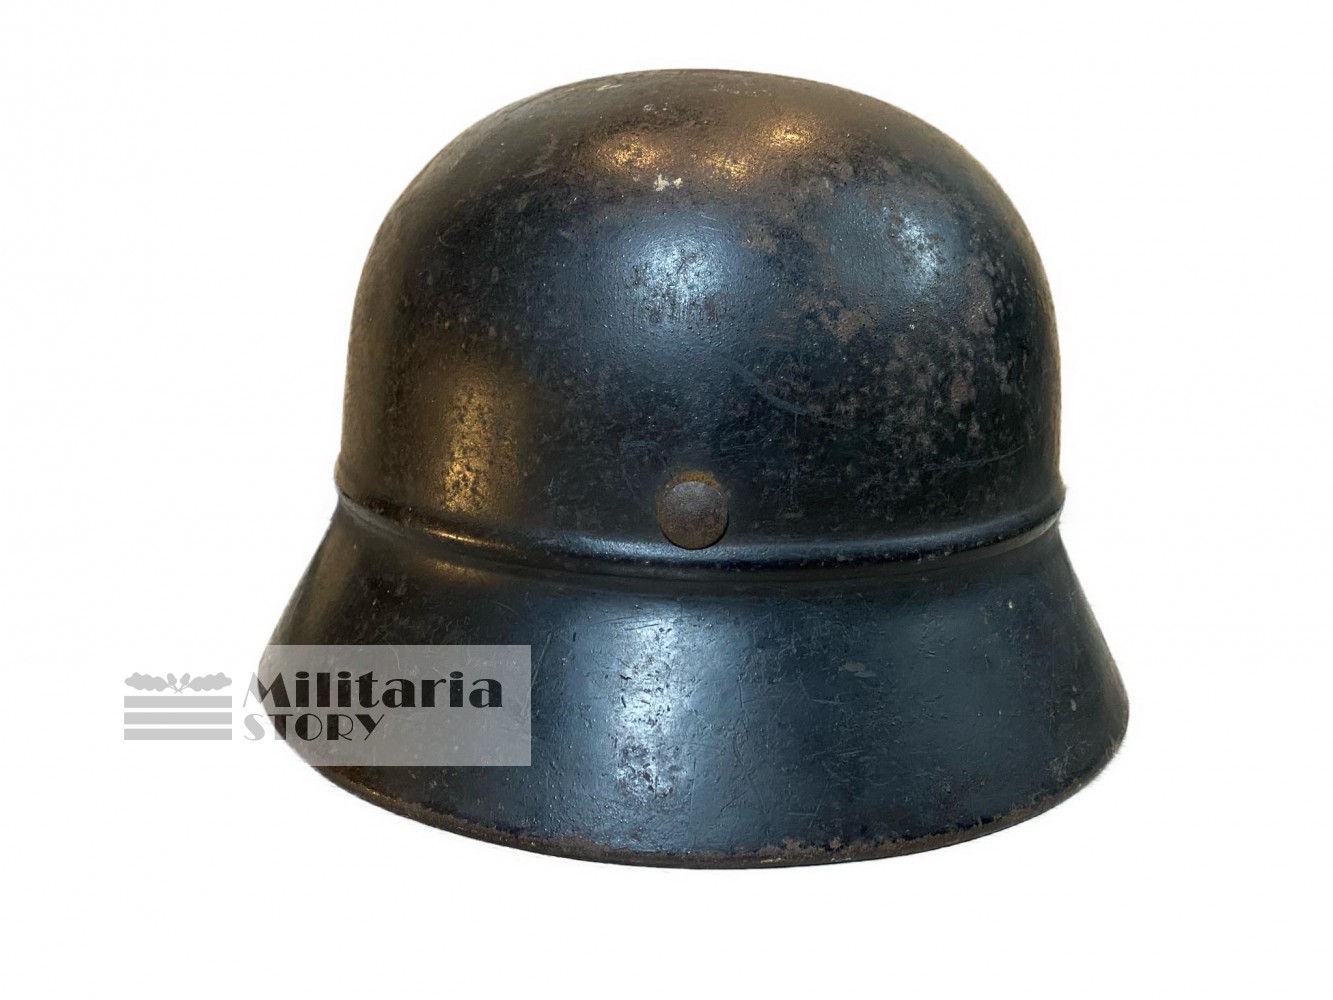 Luftschutz M40 helmet - Luftschutz M40 helmet: German Headgear